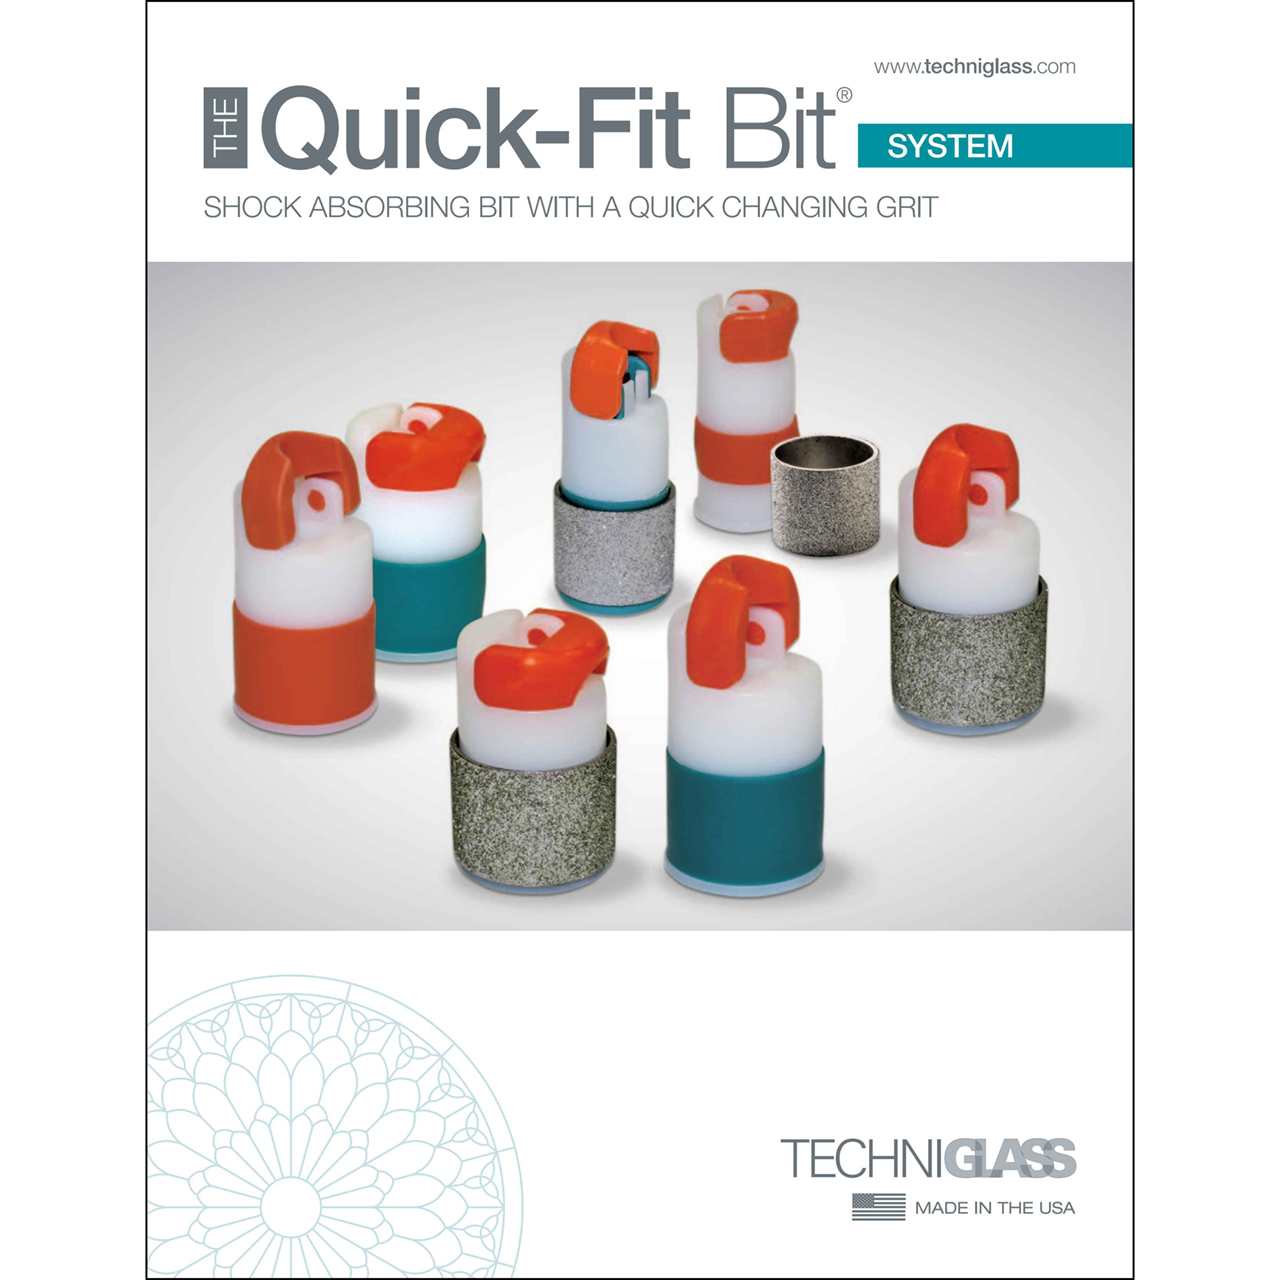 Brochure The Quick-Fit Bit